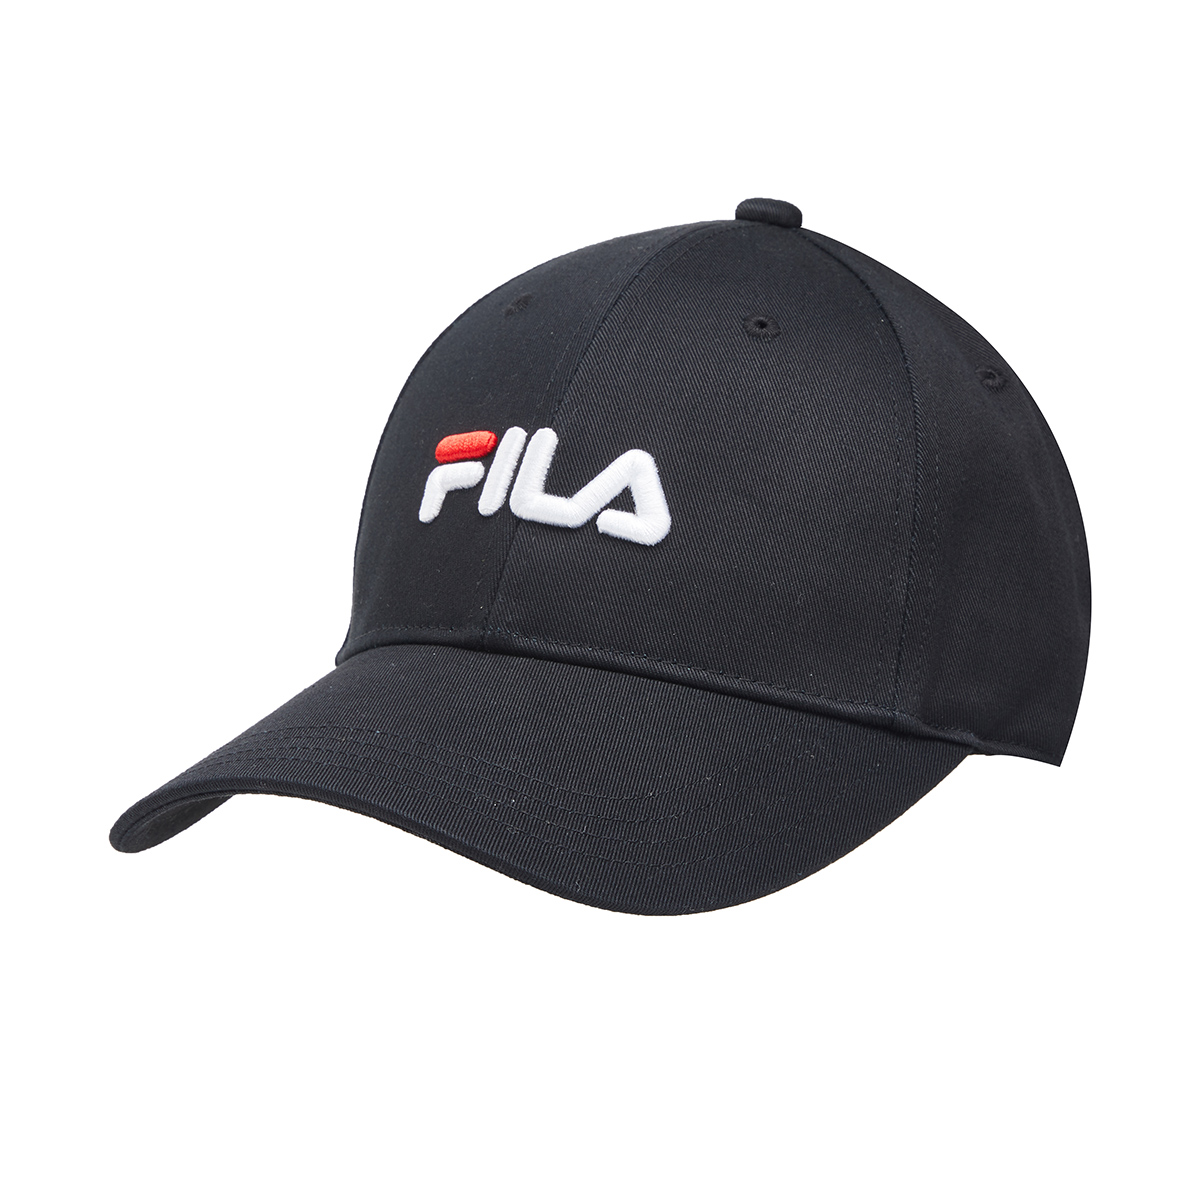 fila hat black